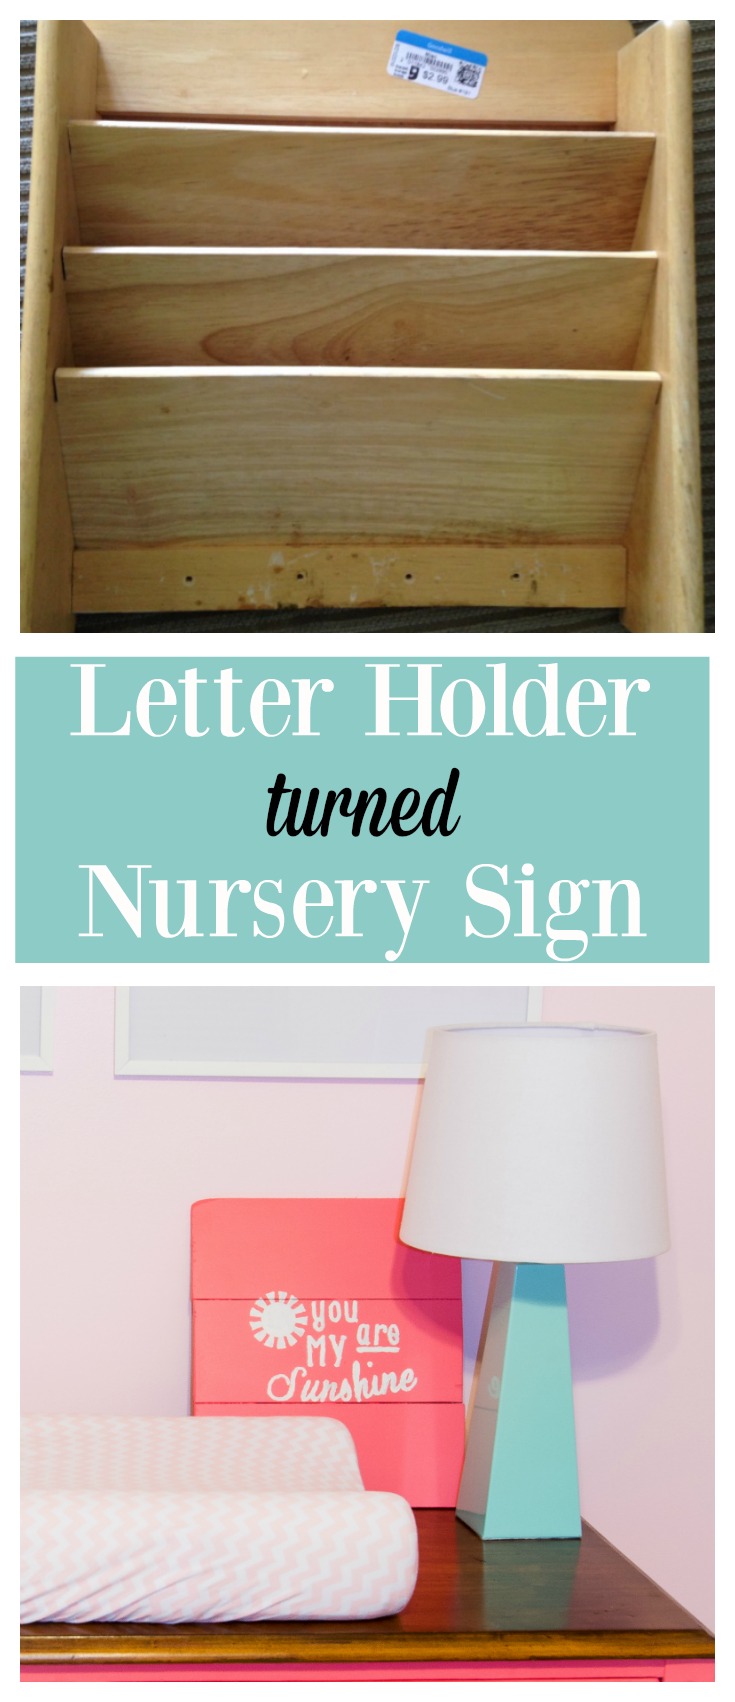 letter-holder-turned-nursery-sign